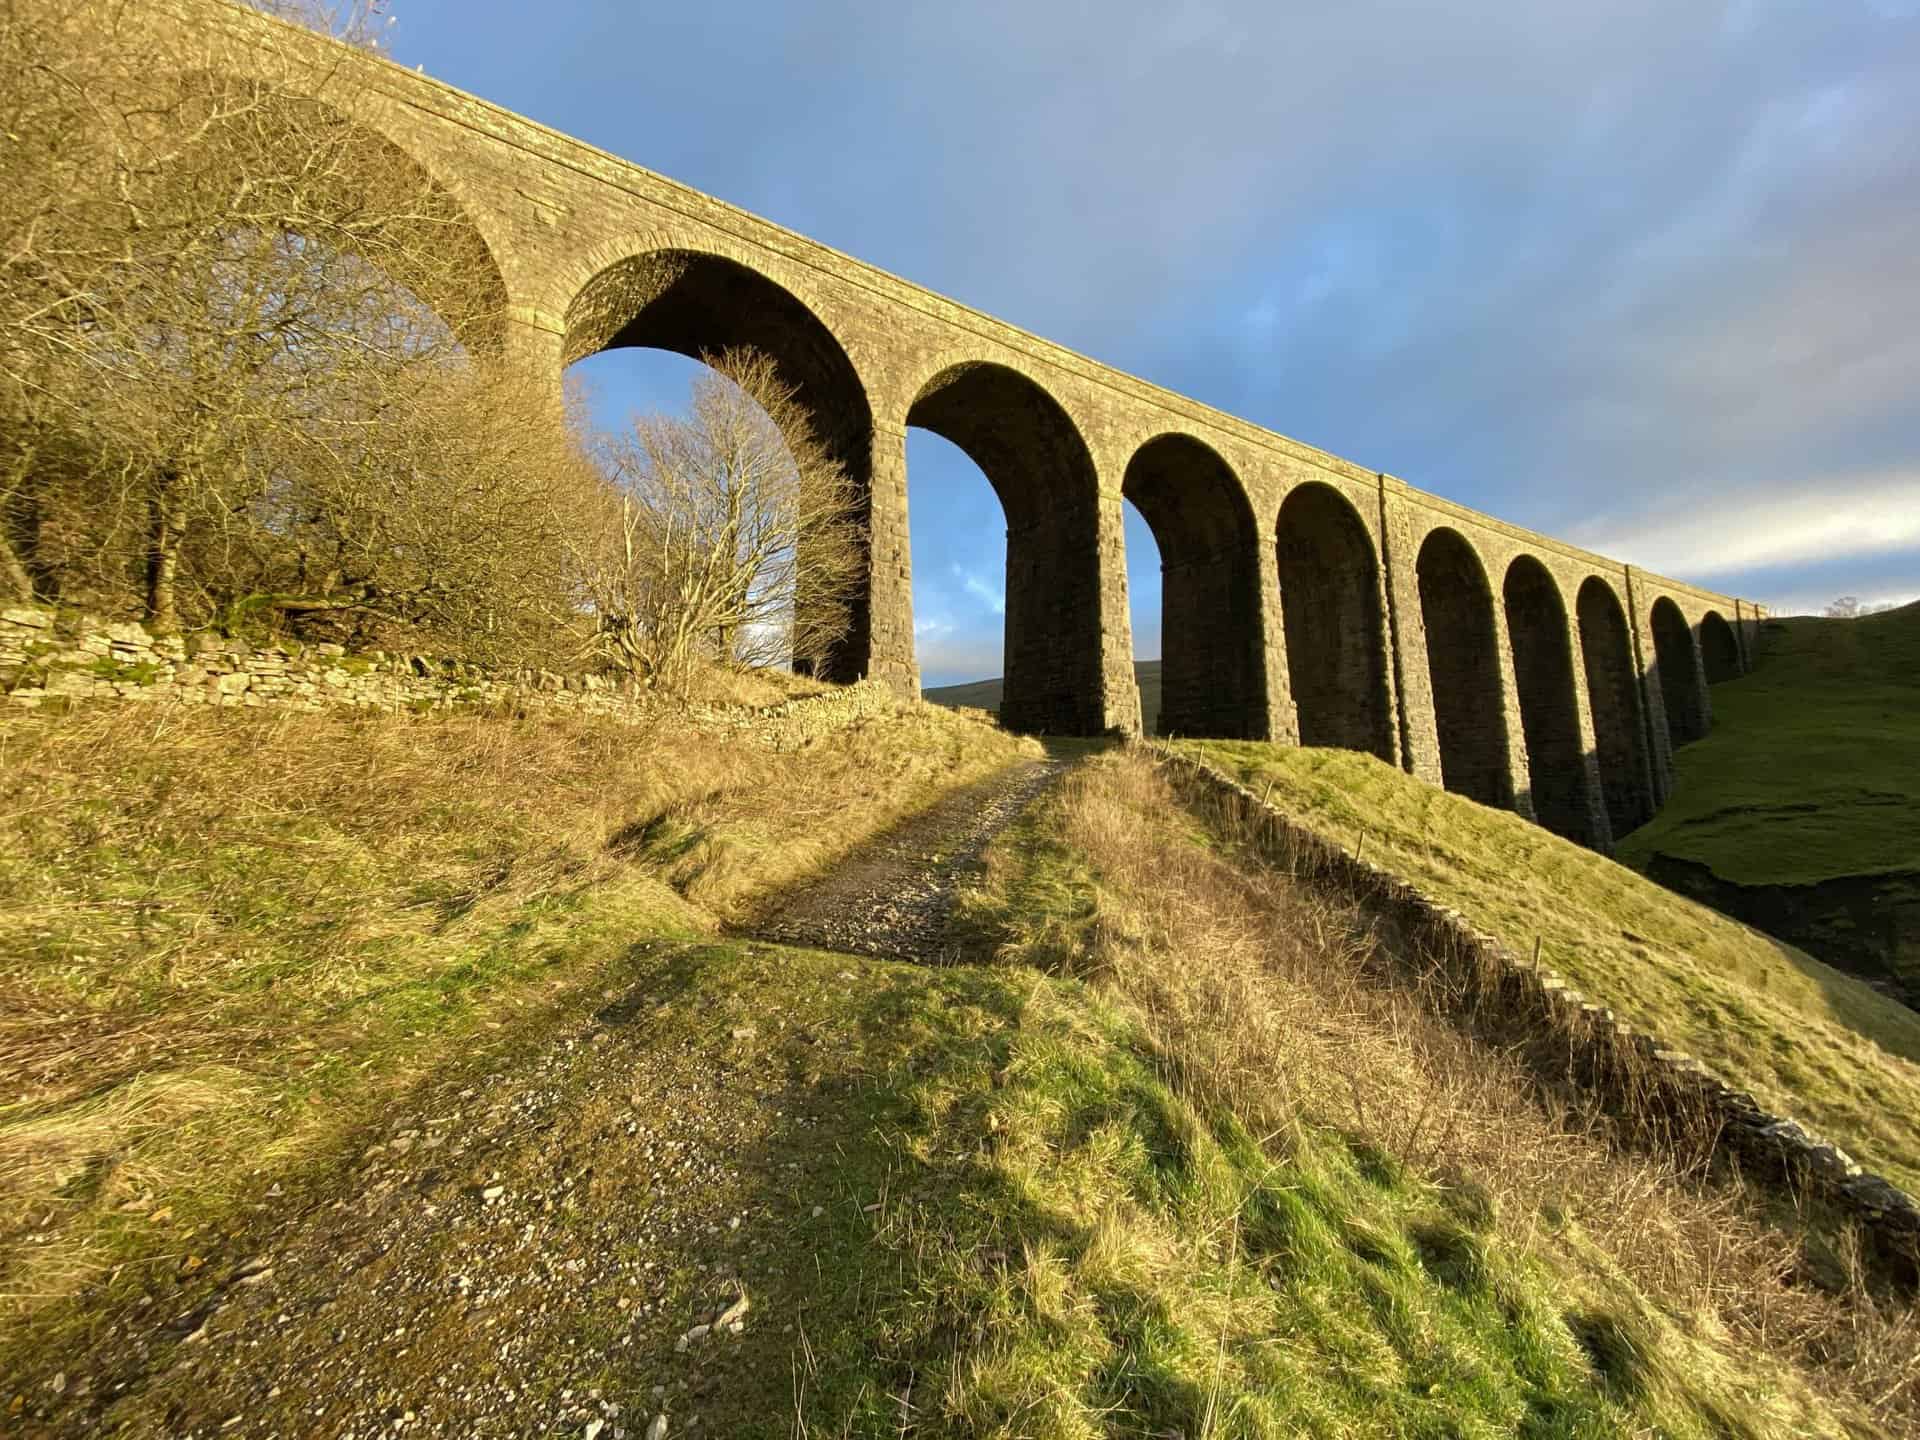 The Grade 2 listed Arten Gill Viaduct.